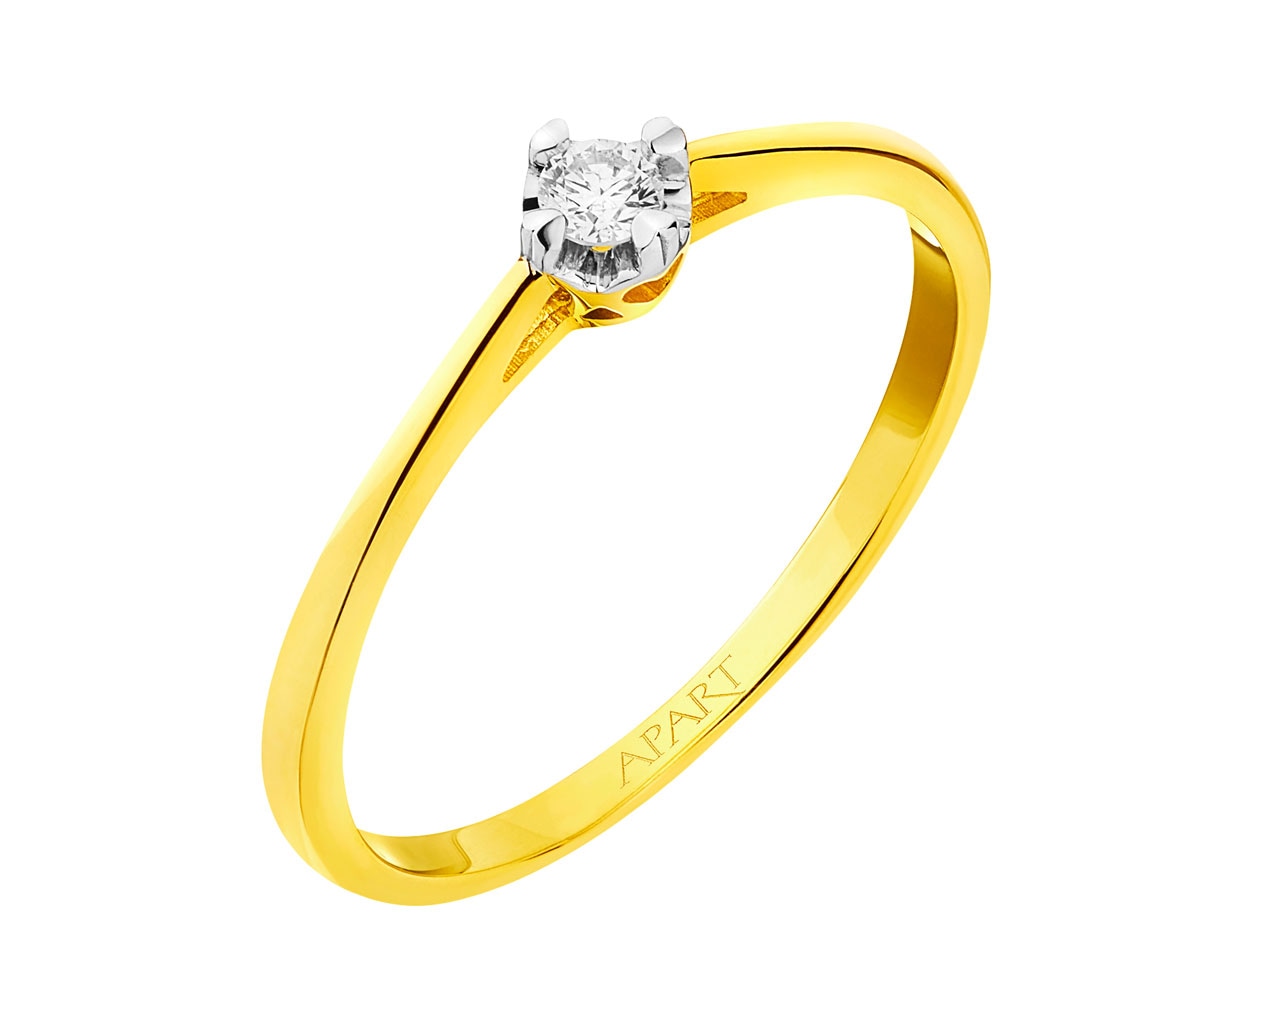 Yellow gold brilliant cut diamond ring 0,05 ct - fineness 14 K